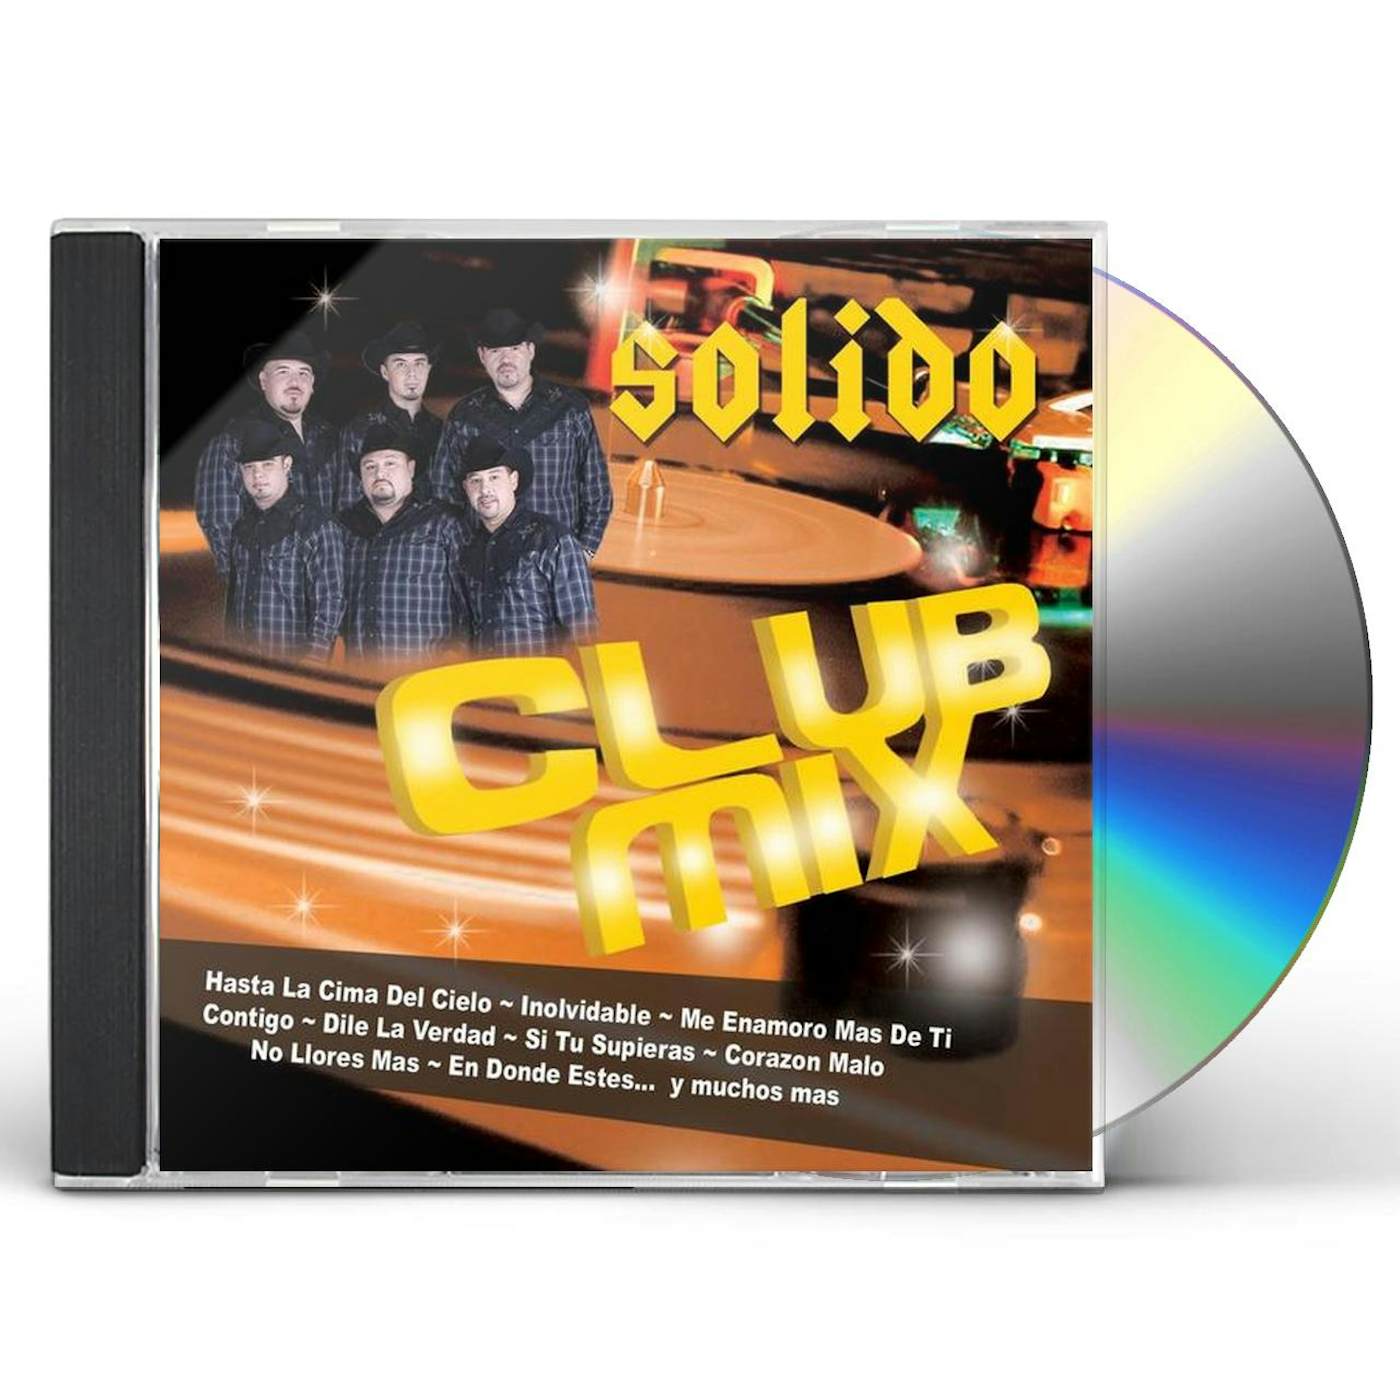 Le Club Solido - Club Solido